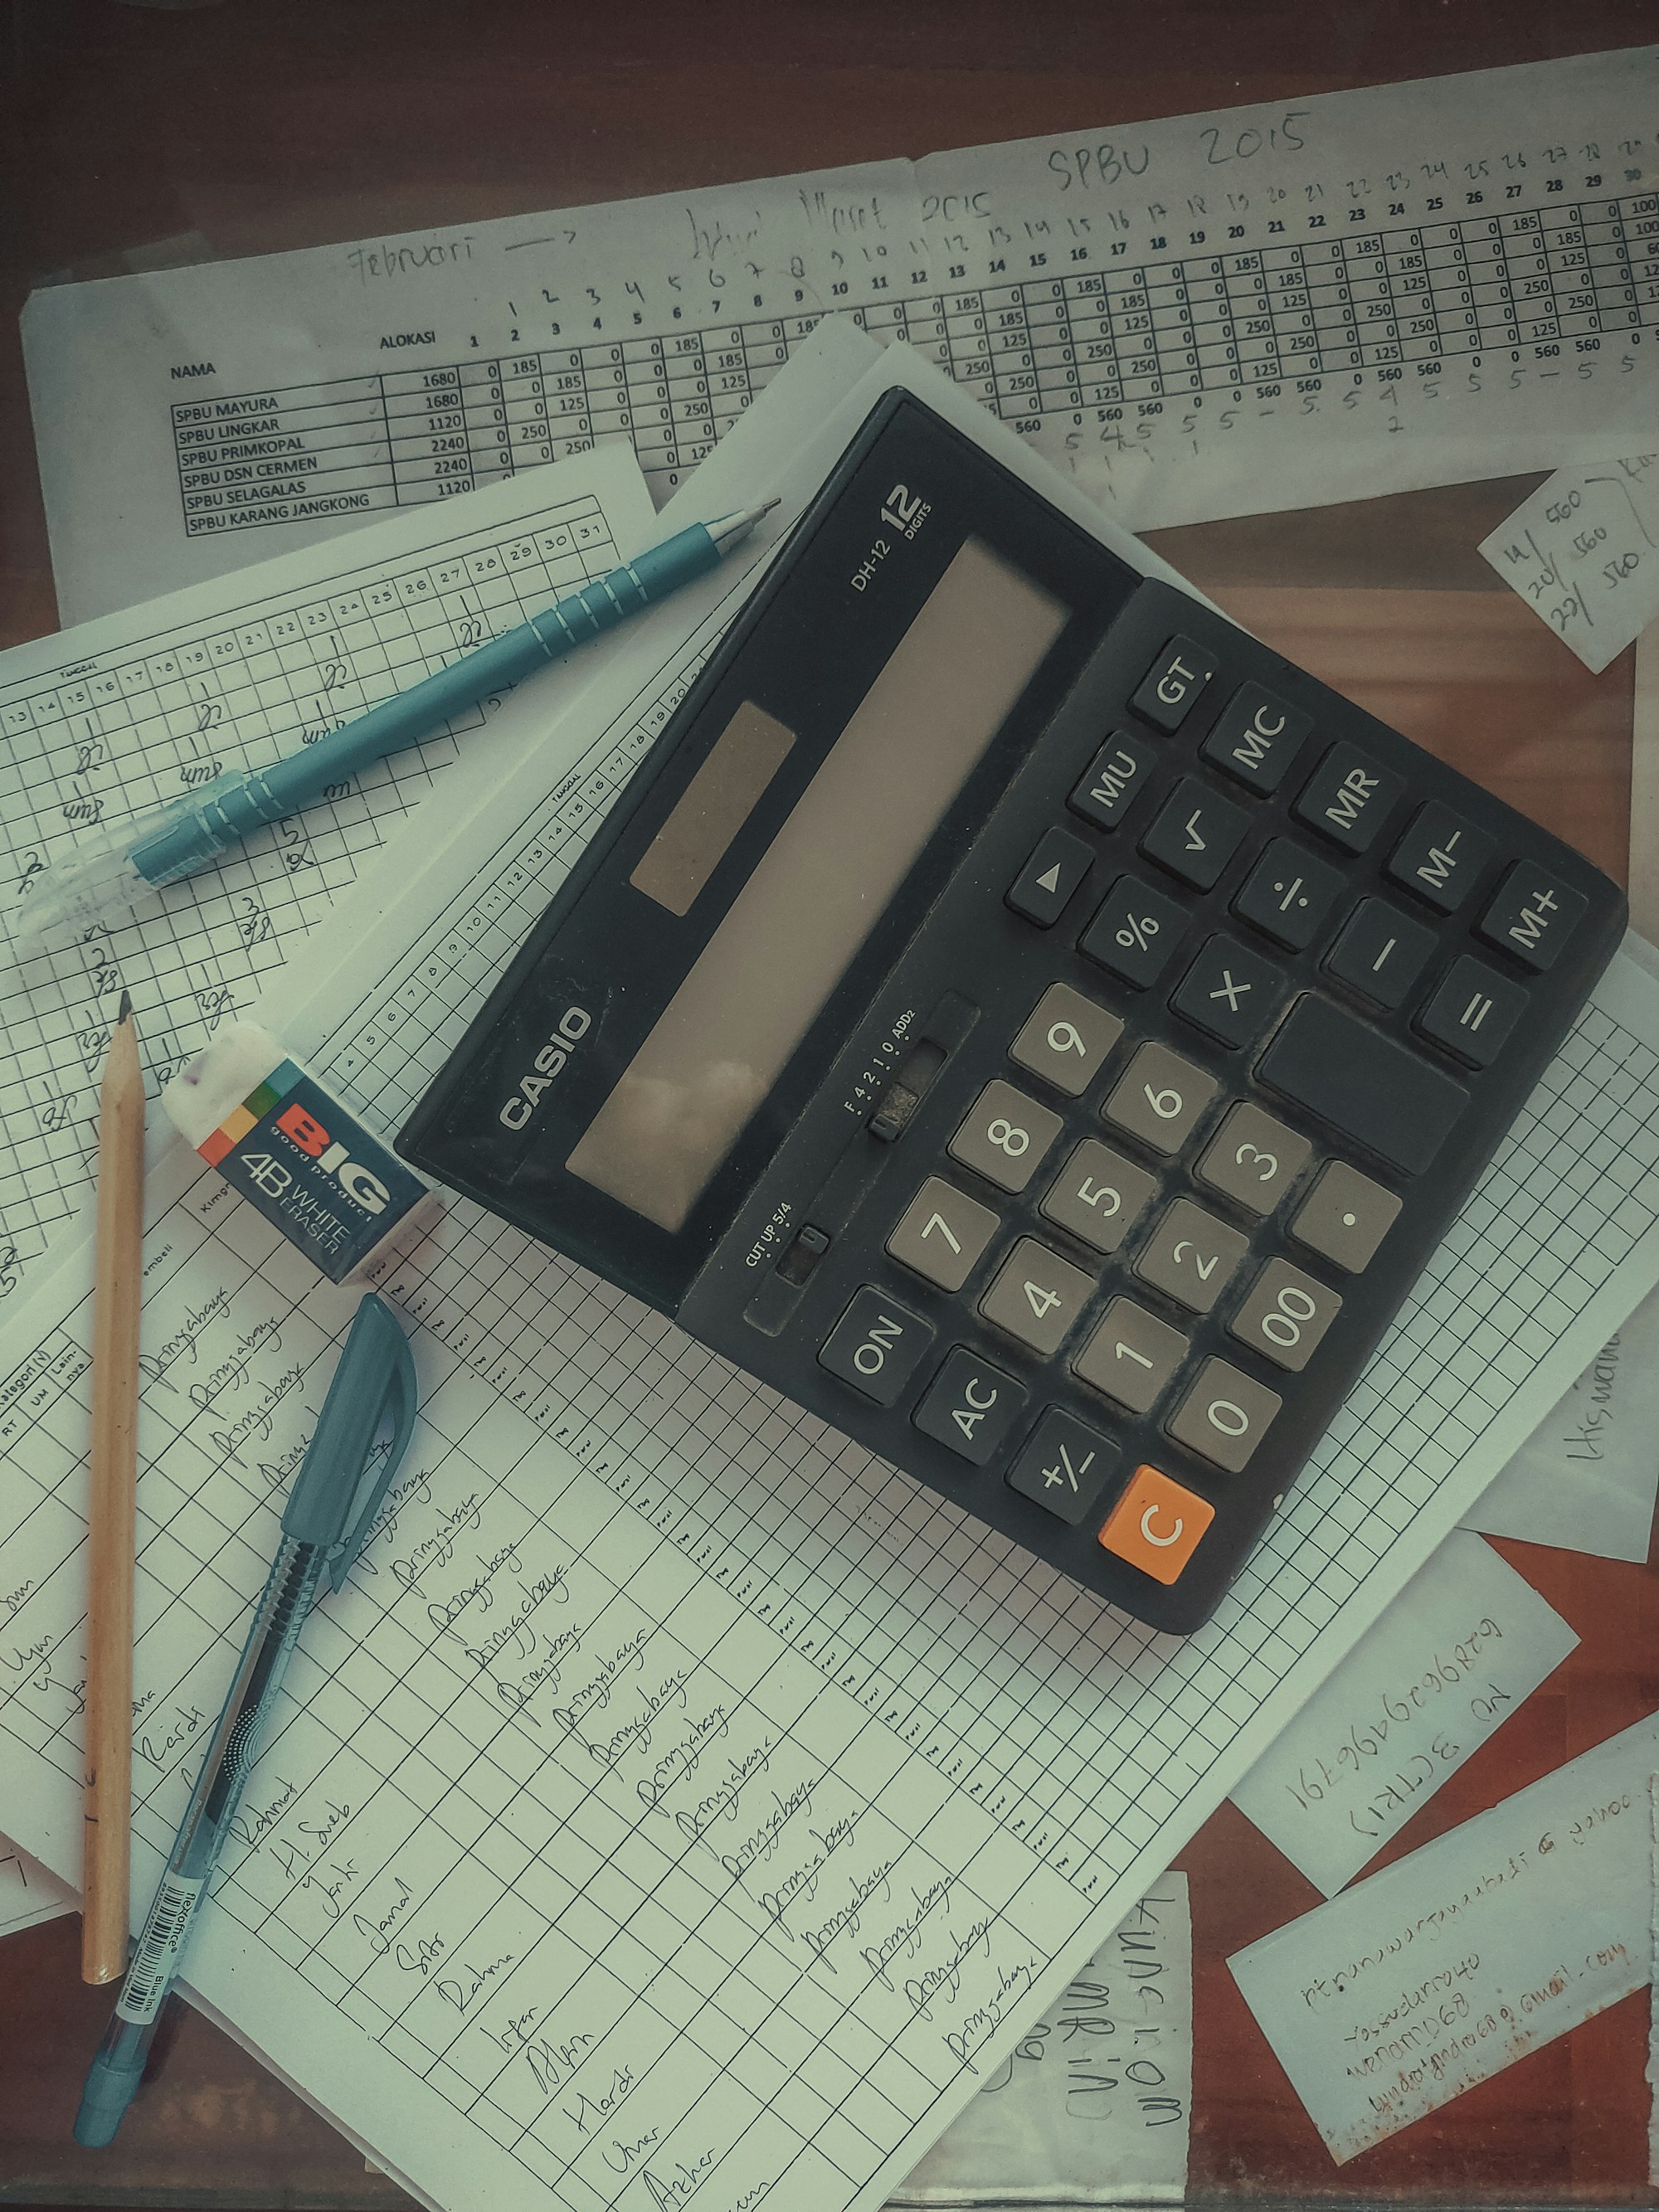 Restaurant plan calculator and paperwork